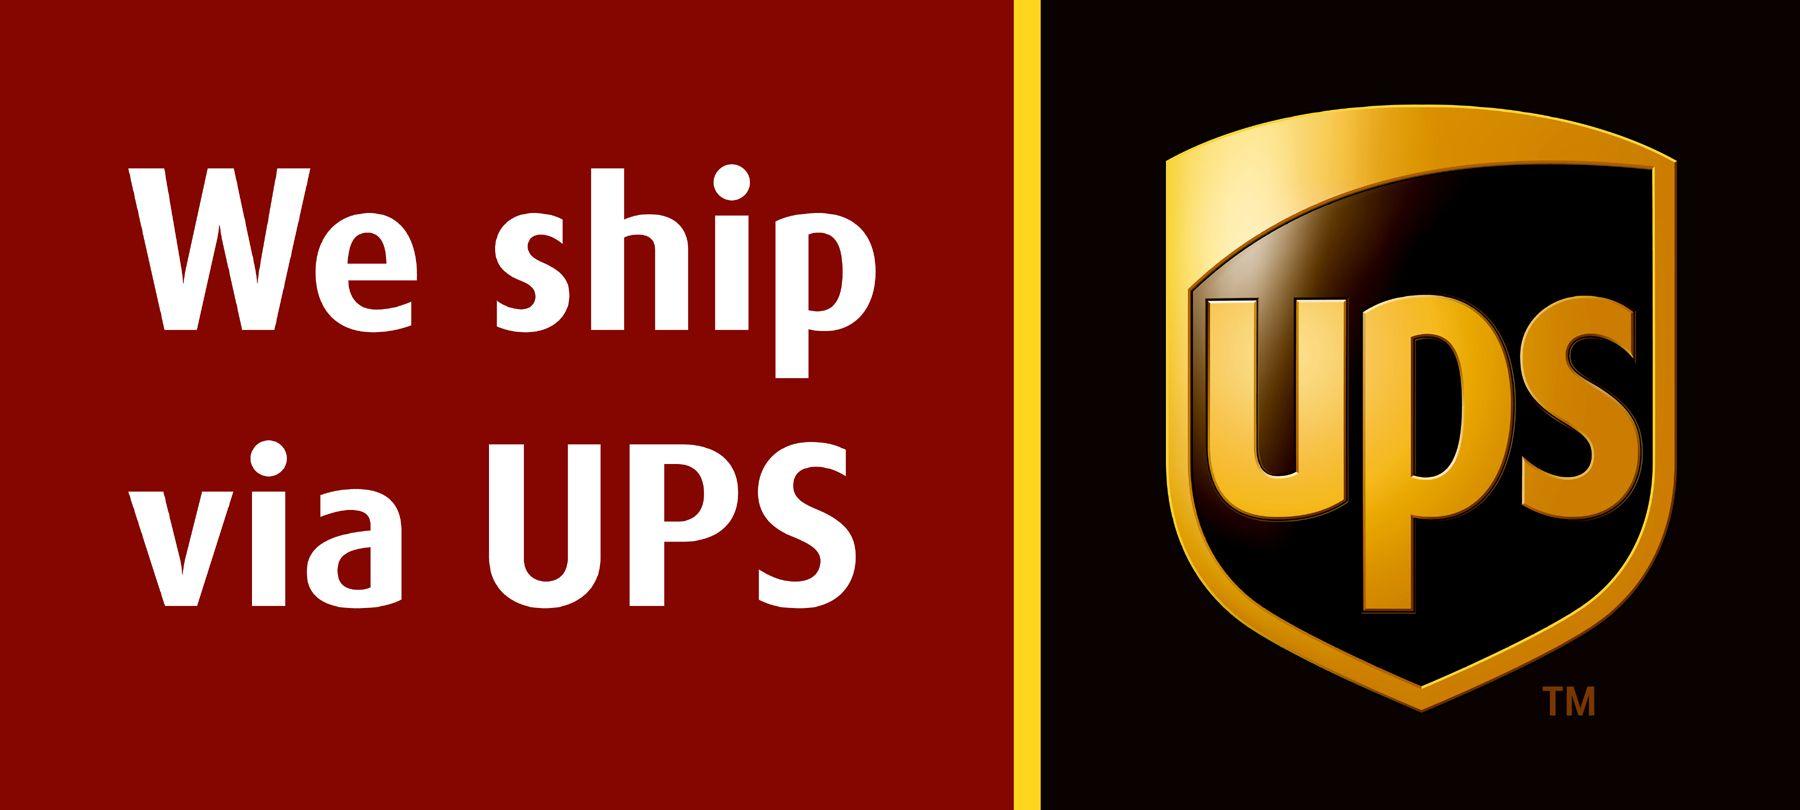 UPS Freight Logo - Ups freight Logos